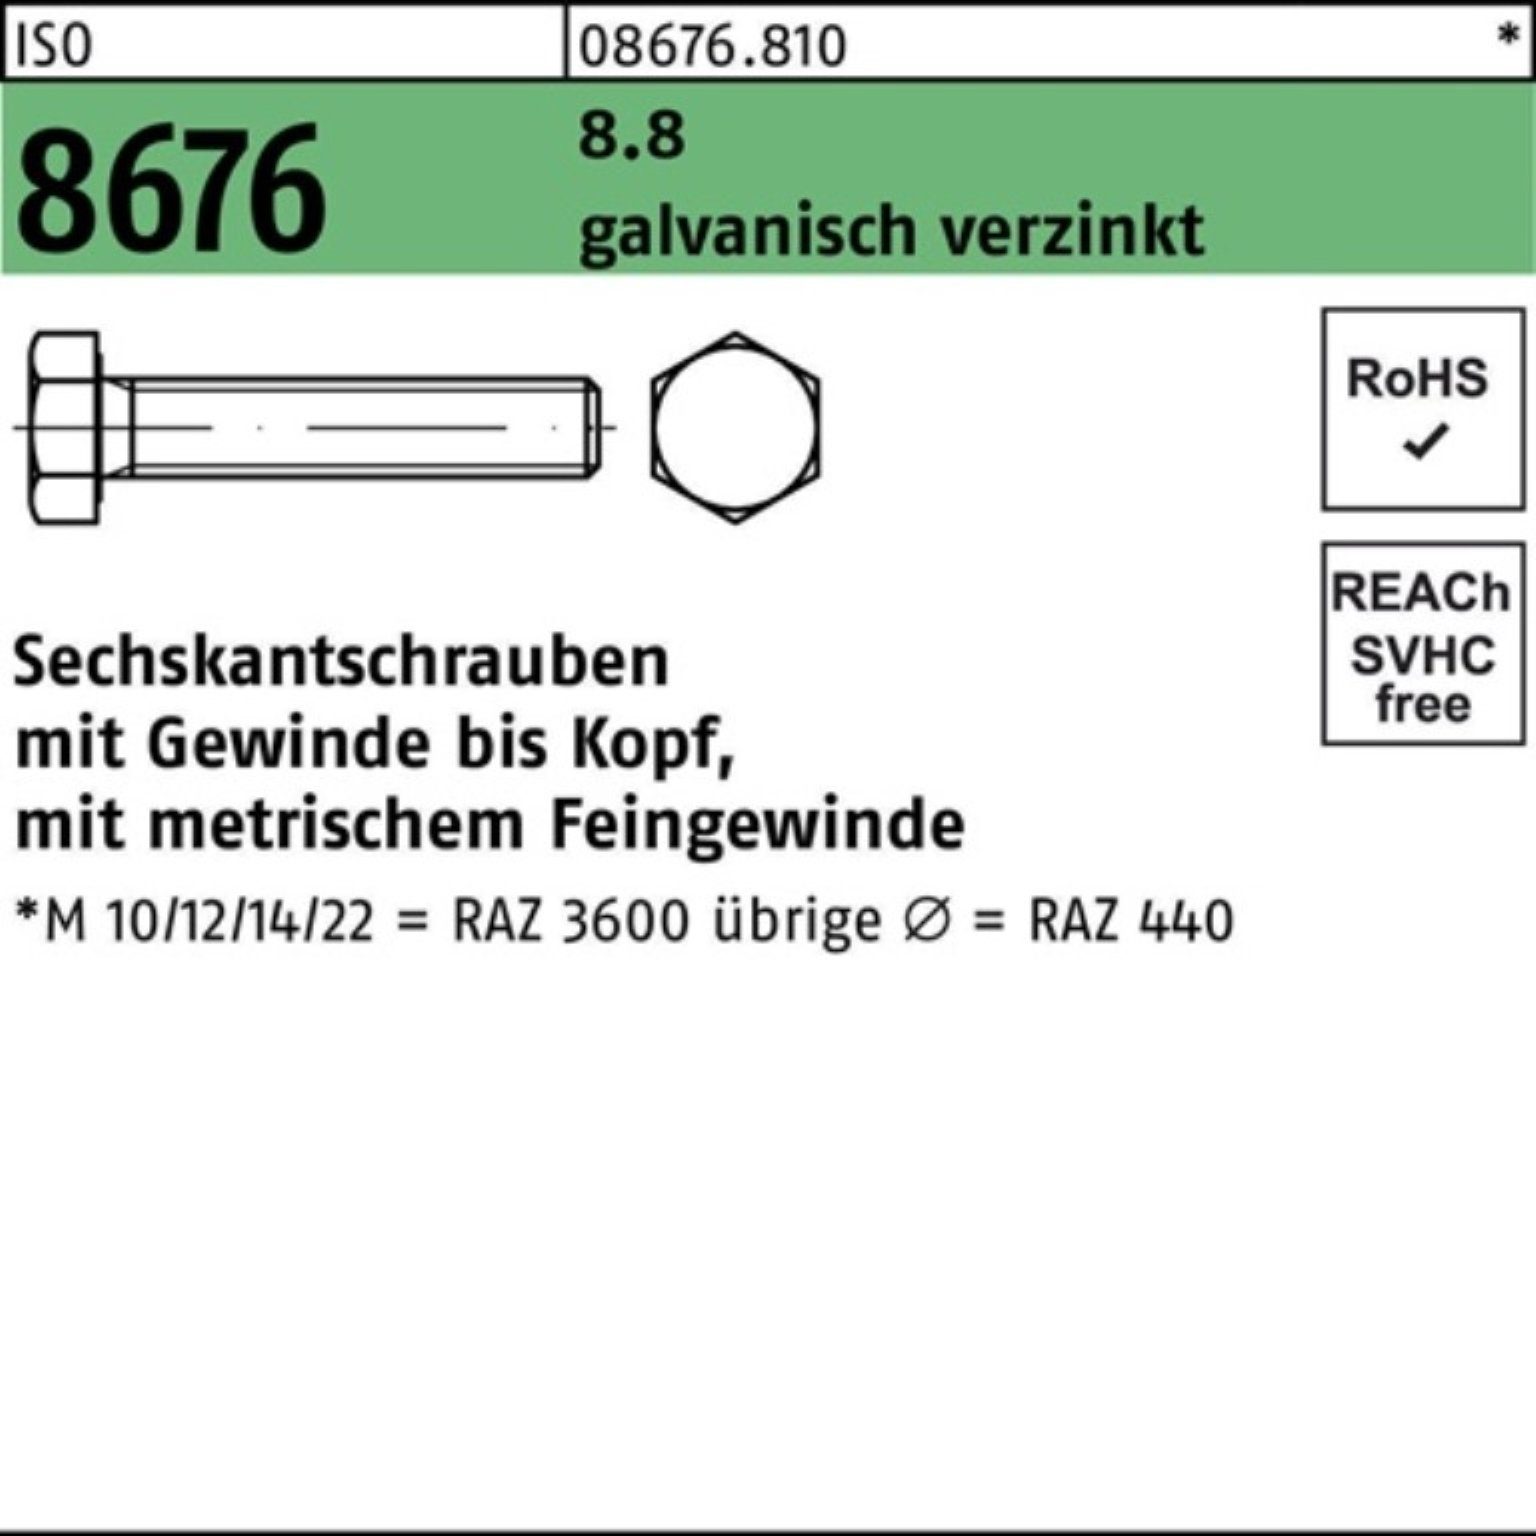 Reyher Sechskantschraube M12x1,25x Pack 8.8 65 Sechskantschraube ISO VG 100er 8676 galv.verz. 5